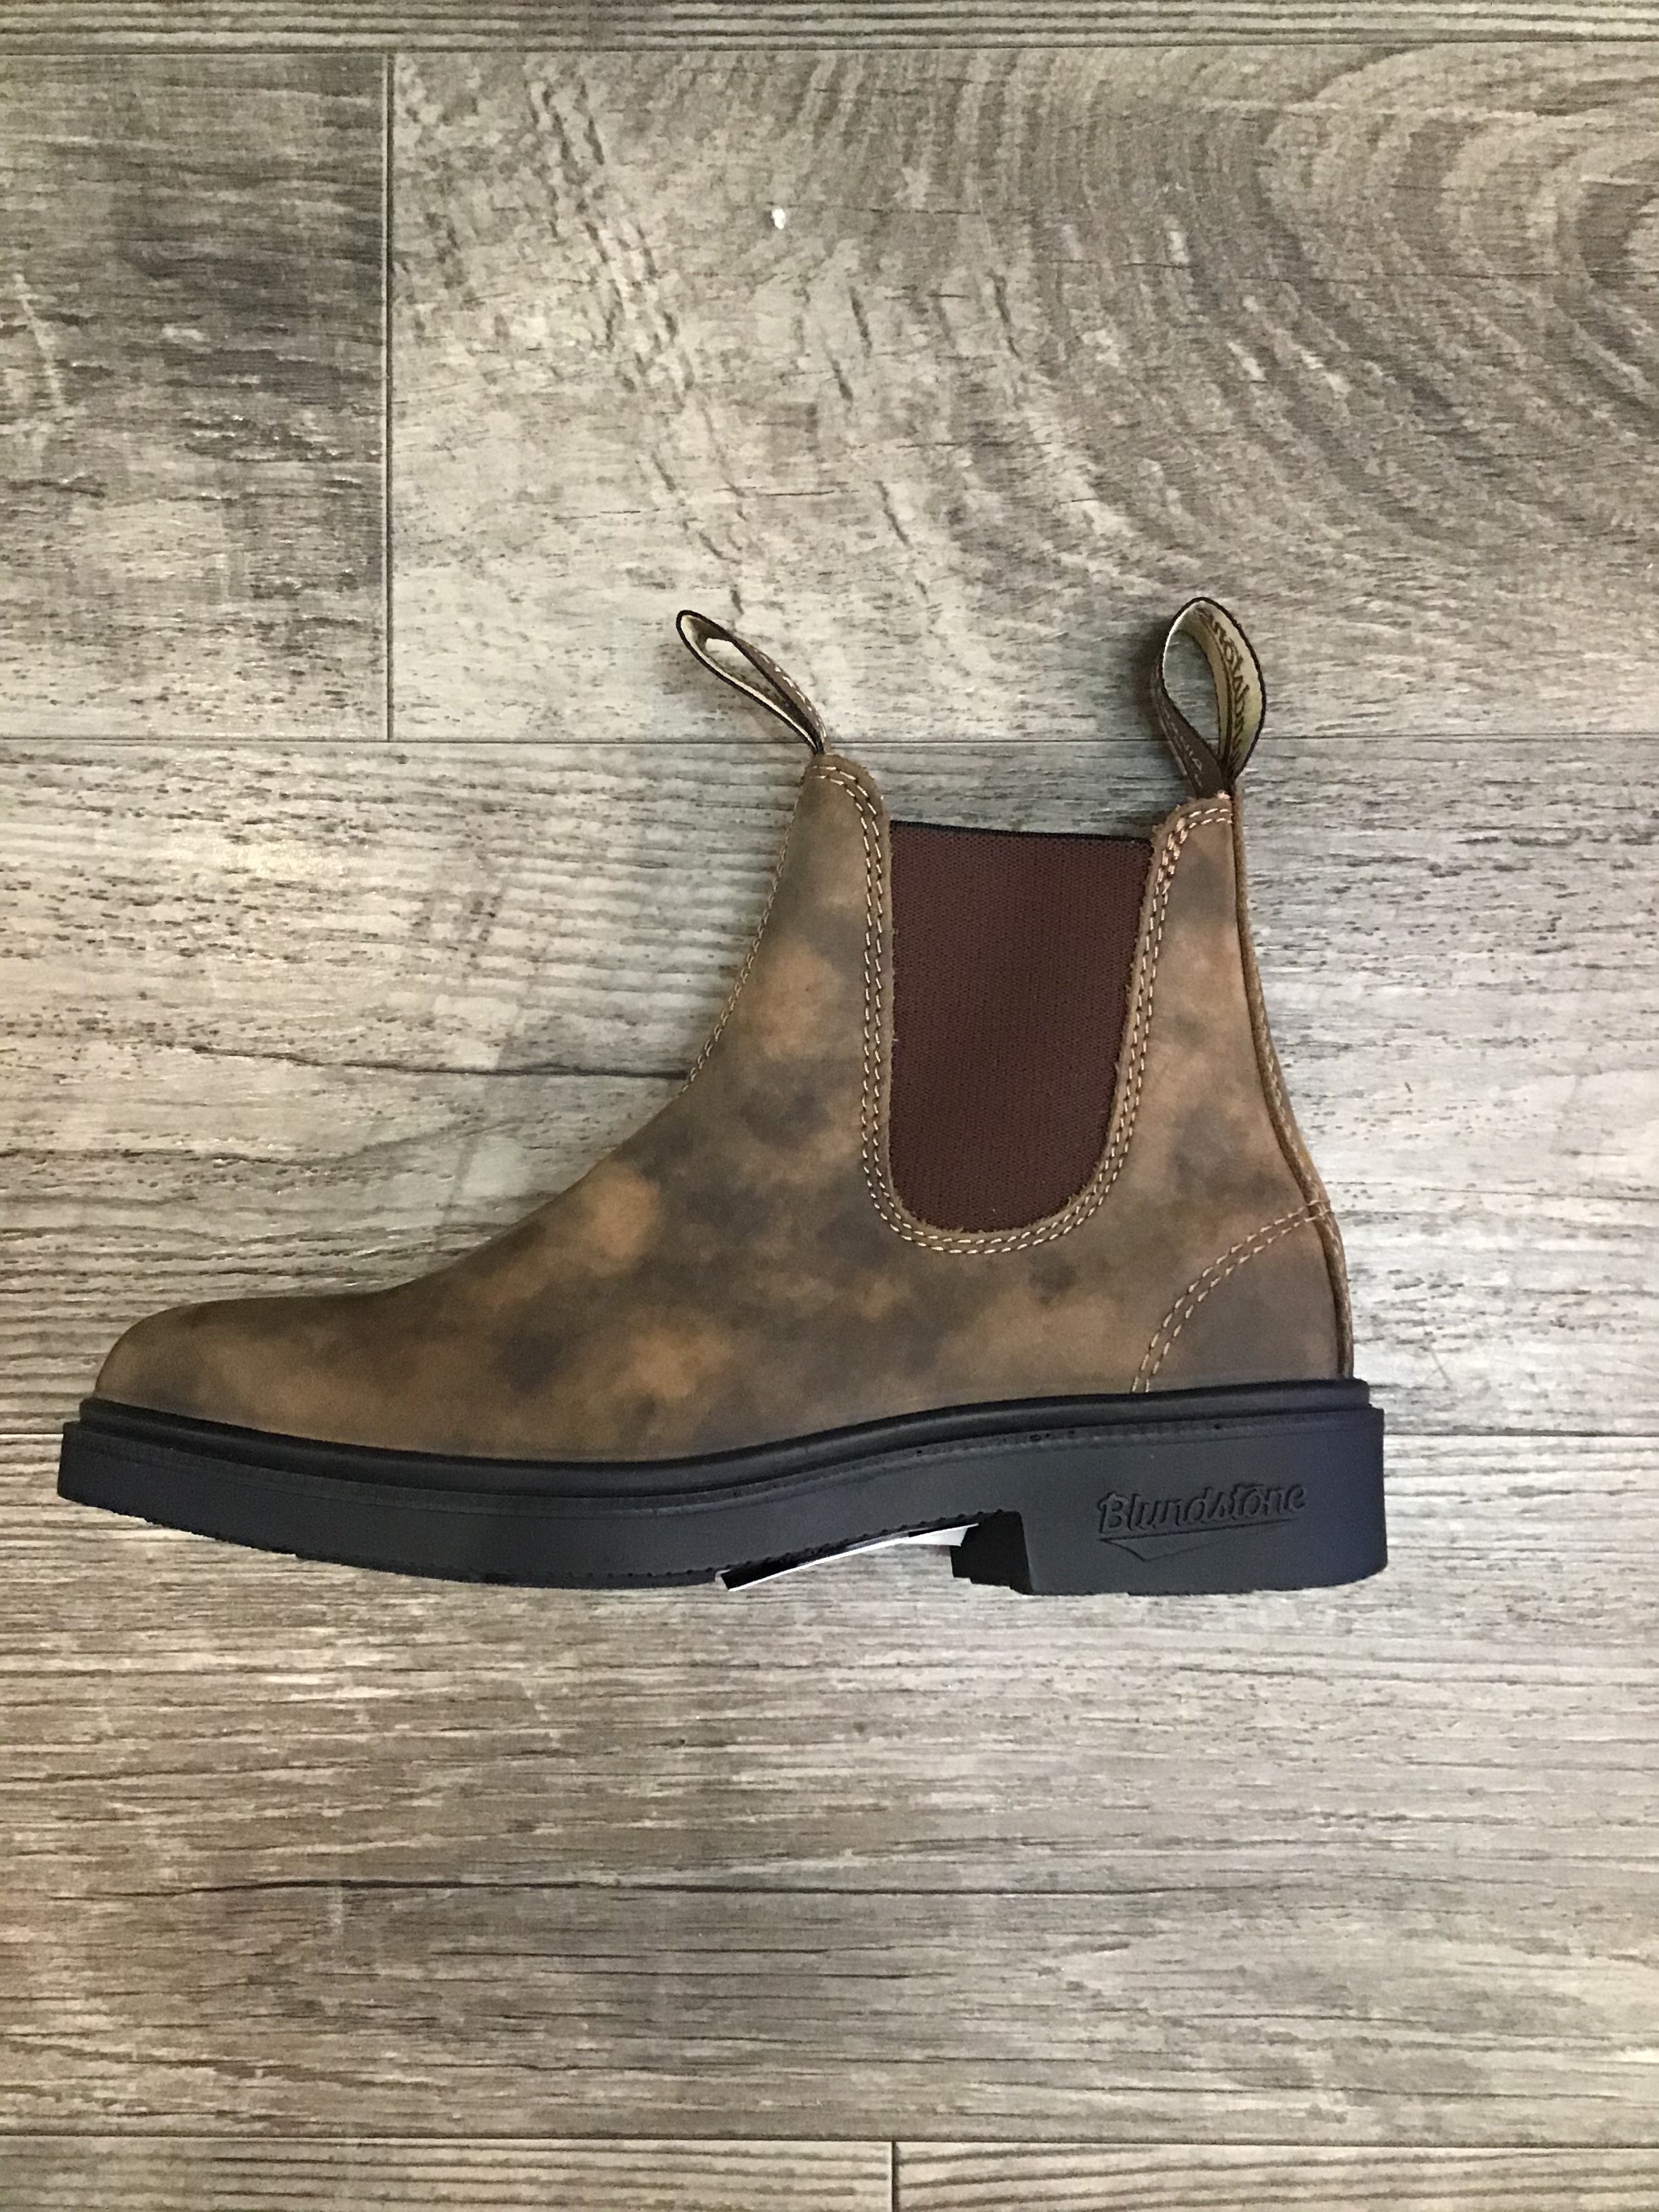 Buy > blundstone 1306 dress boot rustic brown > in stock